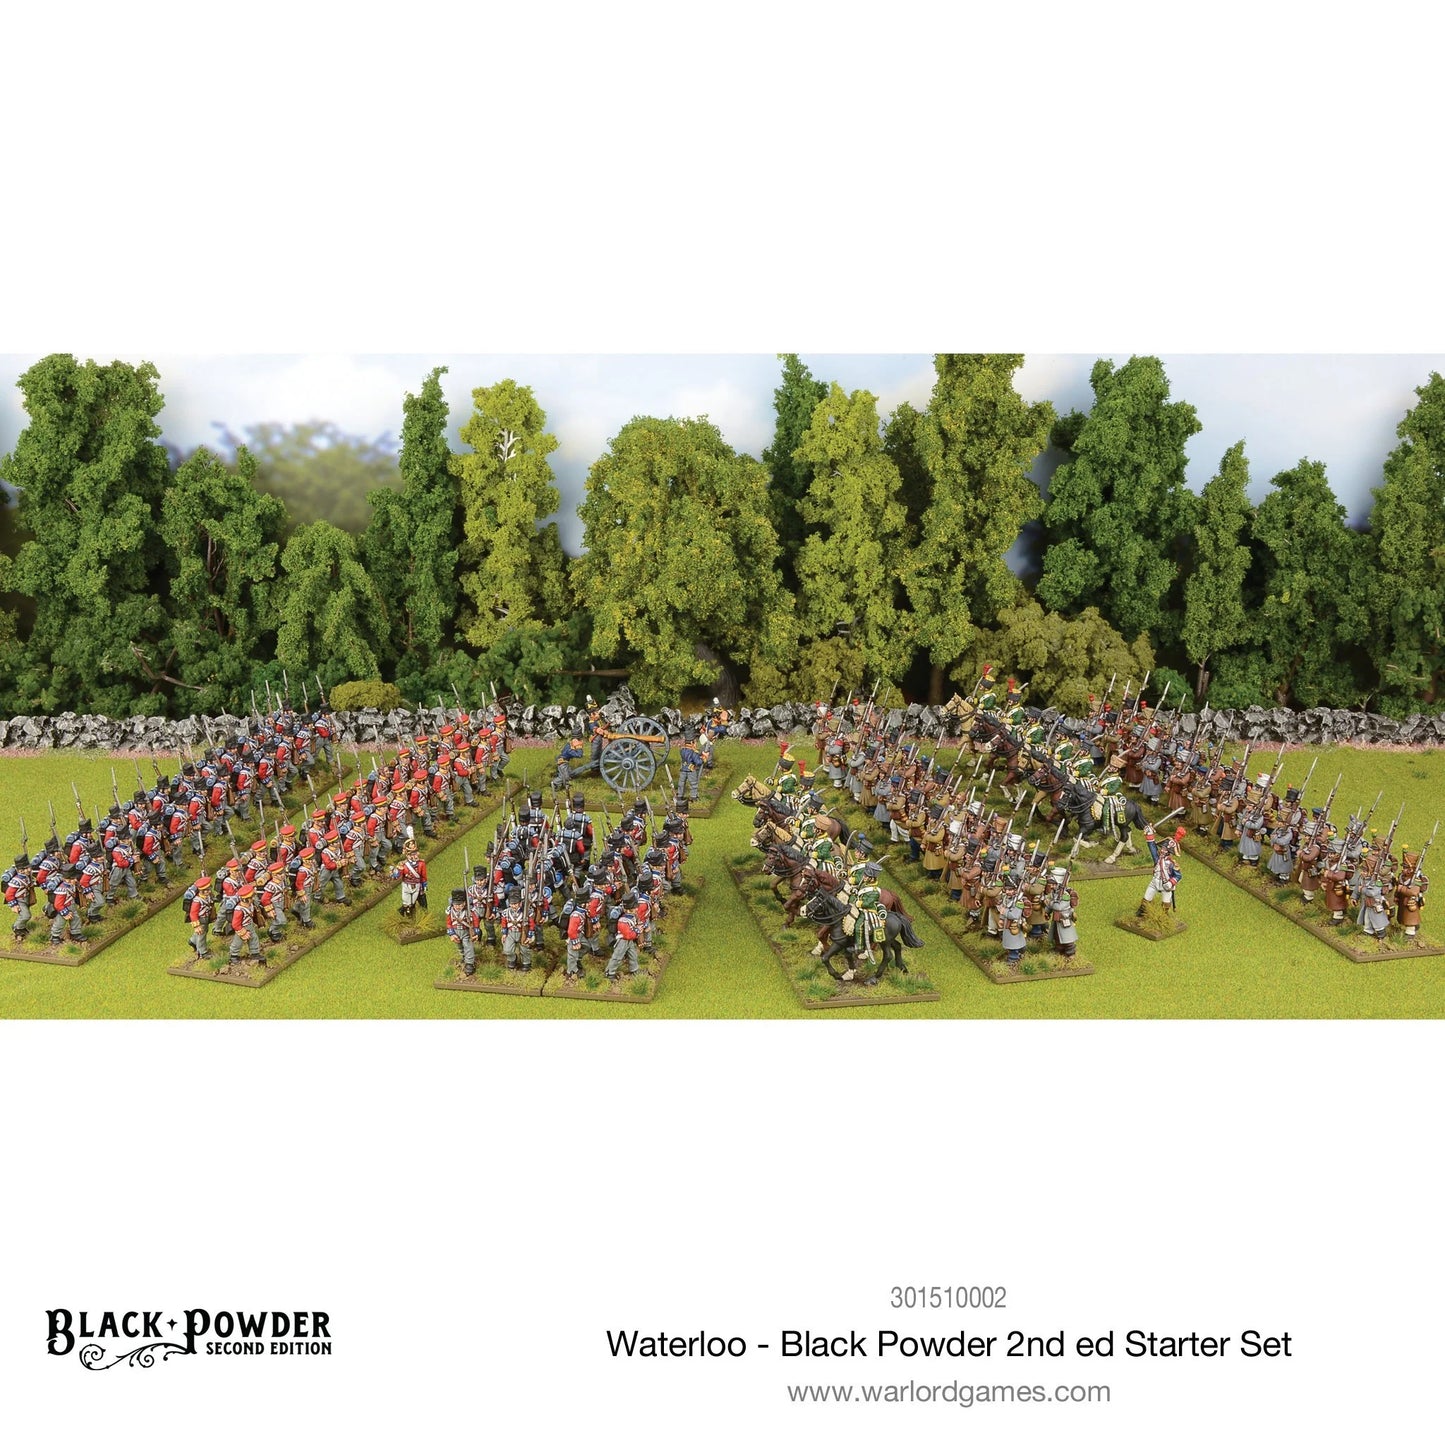 Waterloo - Black Powder 2nd edition Starter Set (German Edition) - 301530002